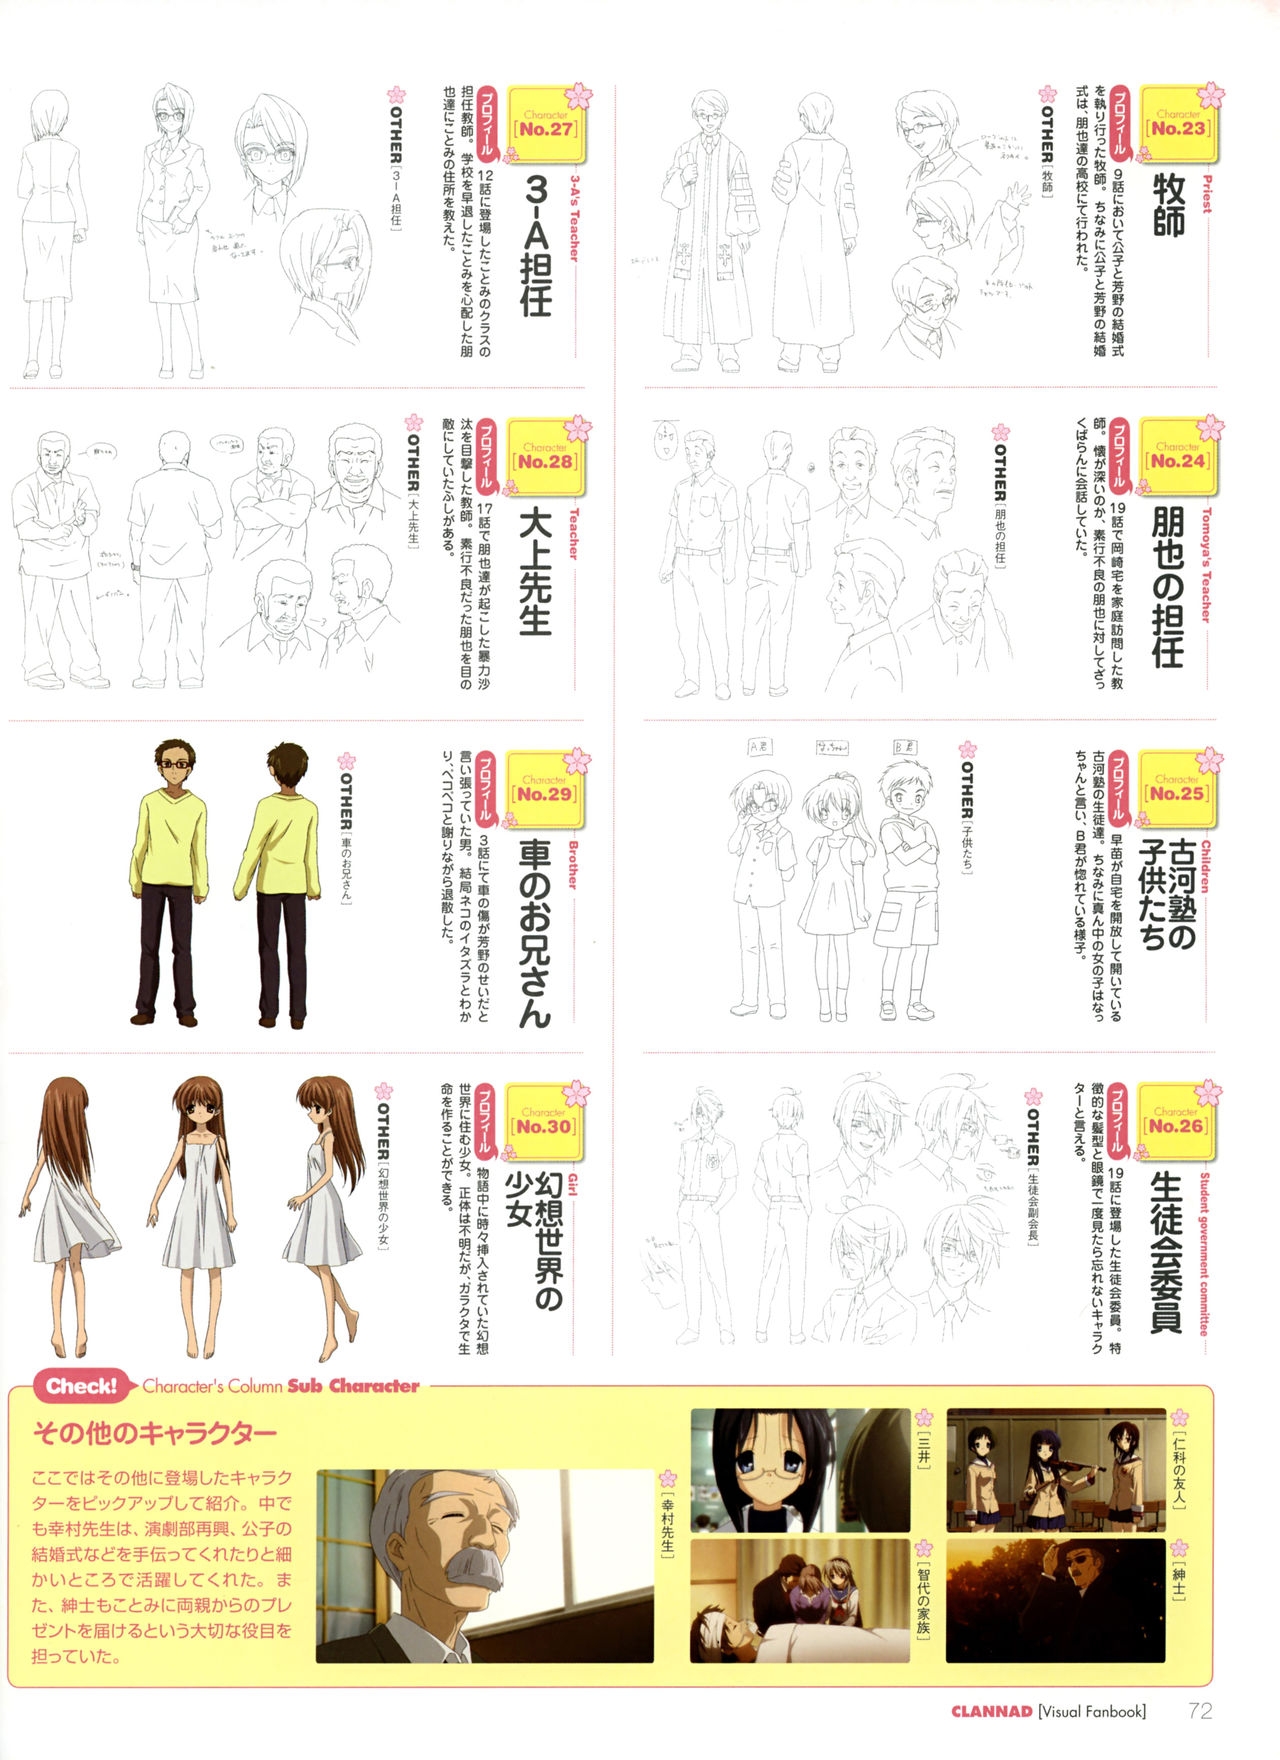 Clannad TV Animation Visual Fan Book 74